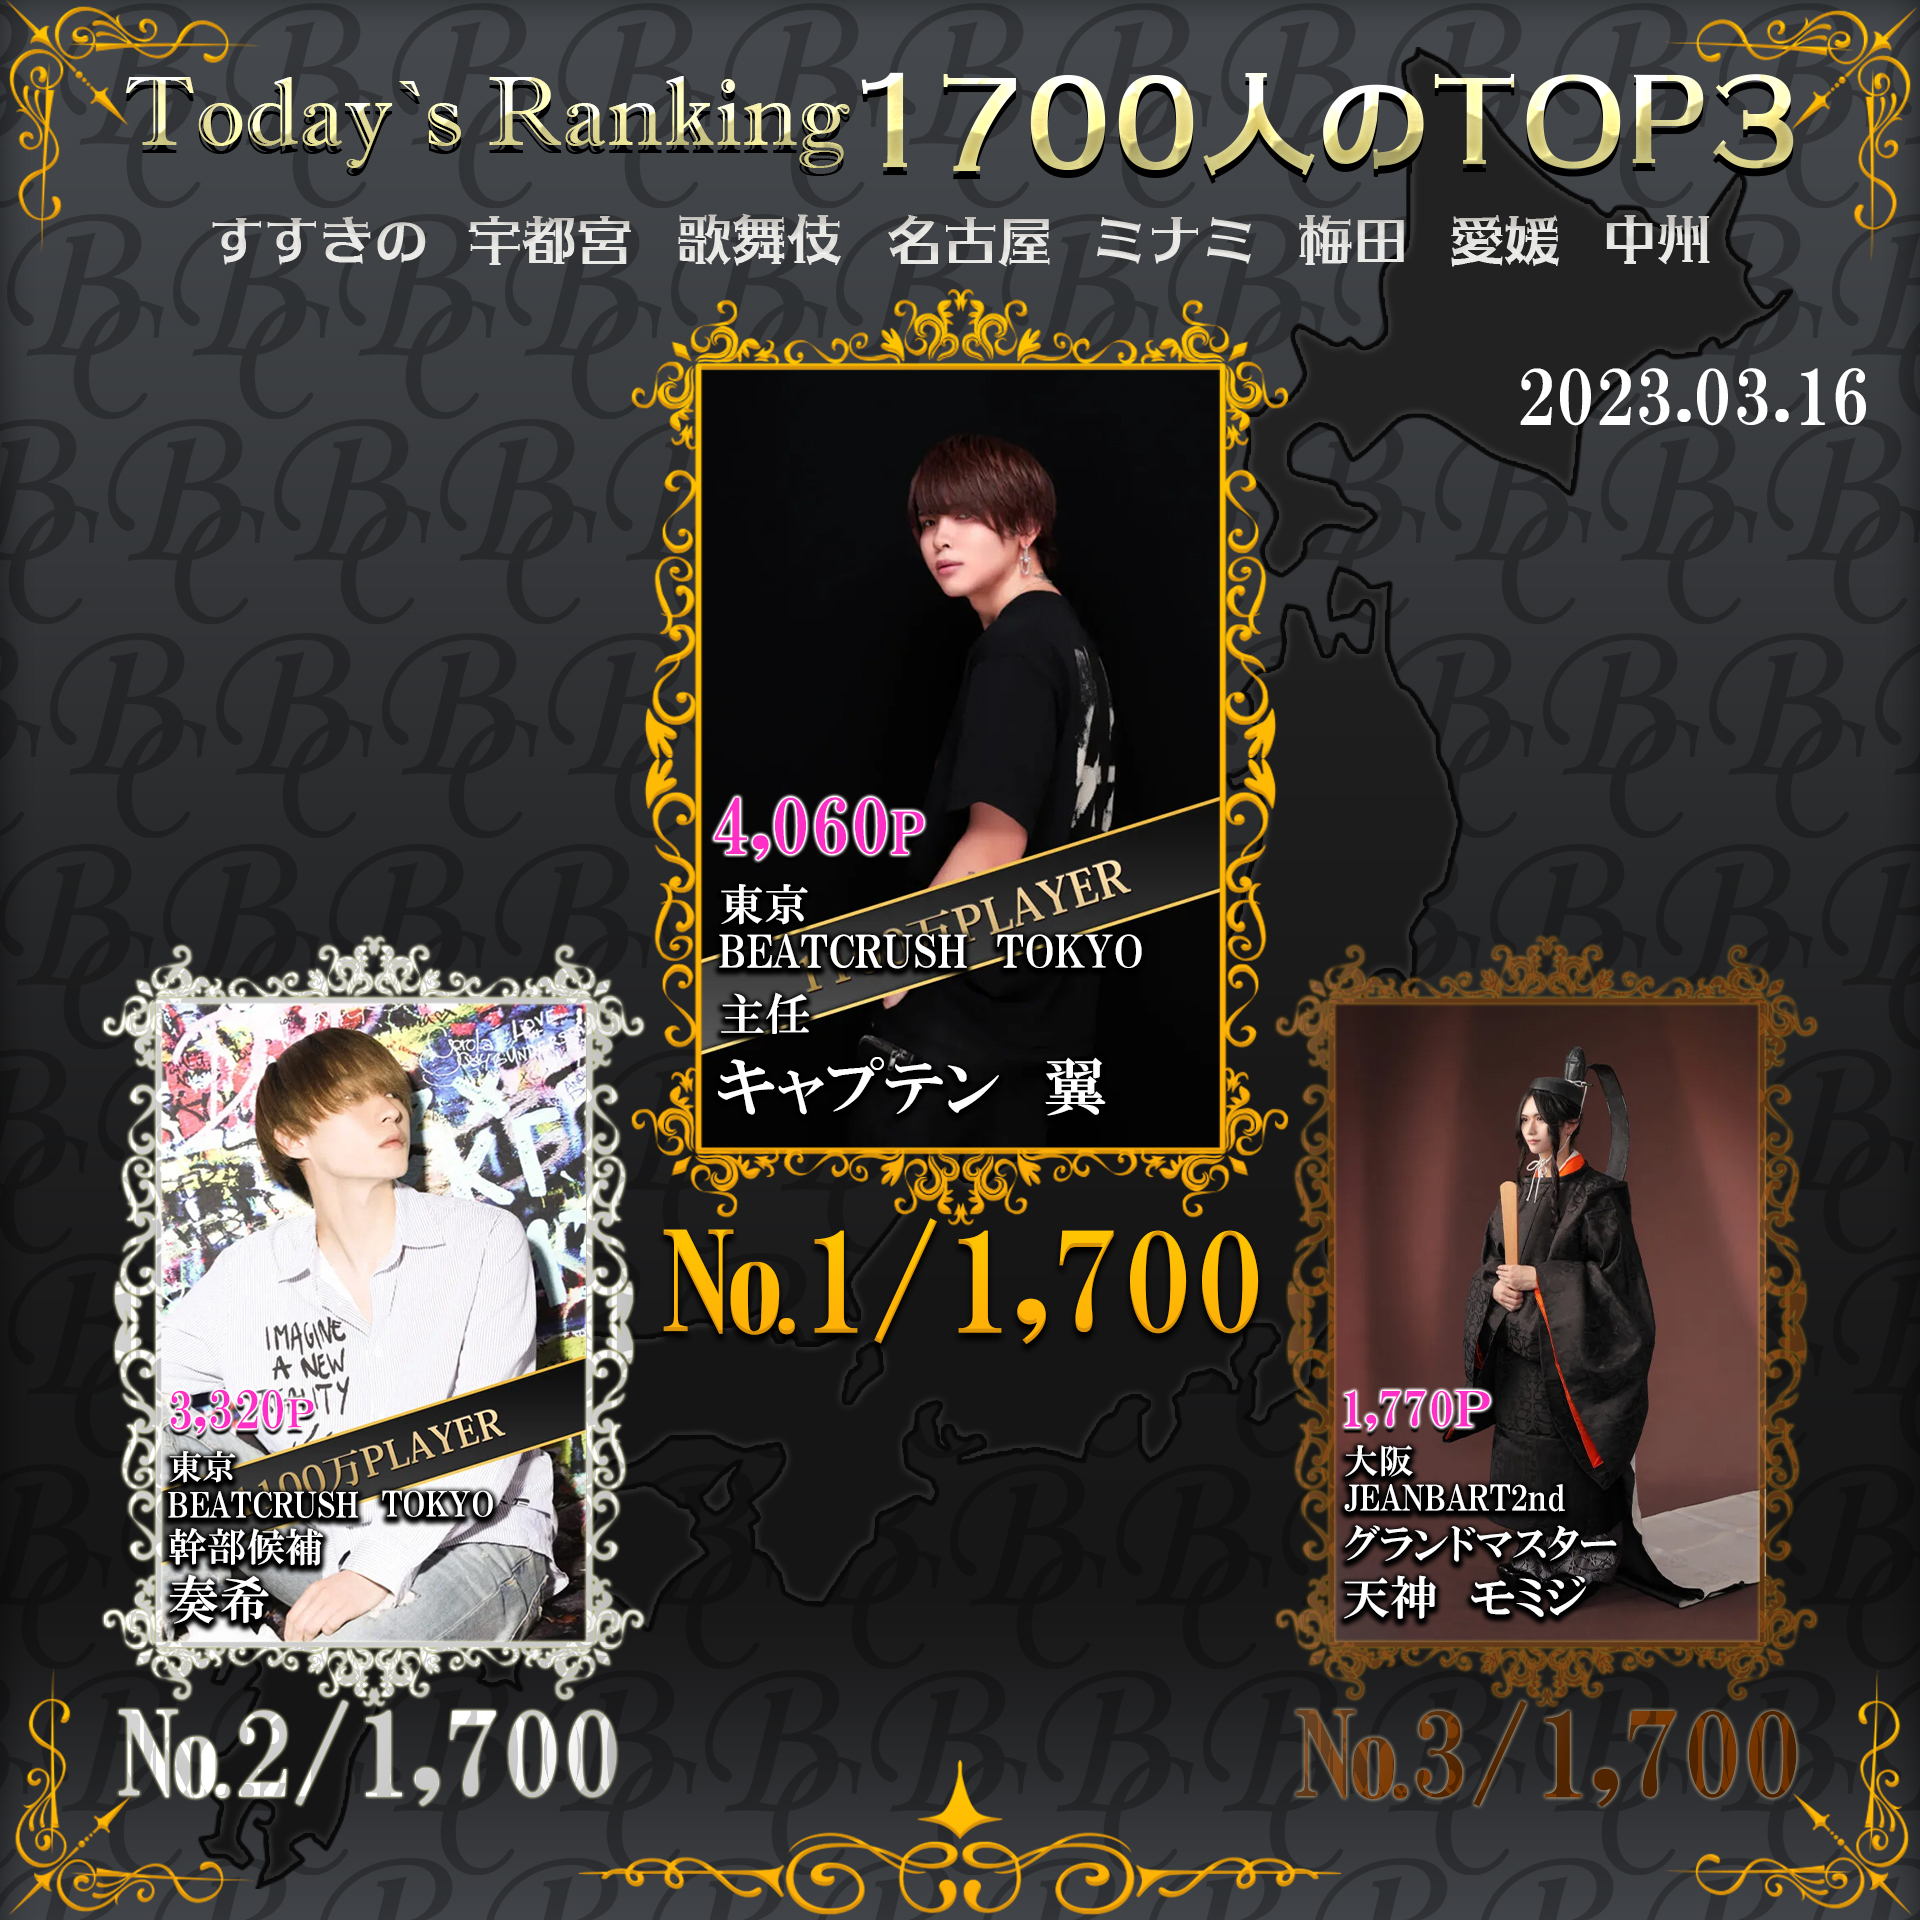 3/16 Today‘s Ranking